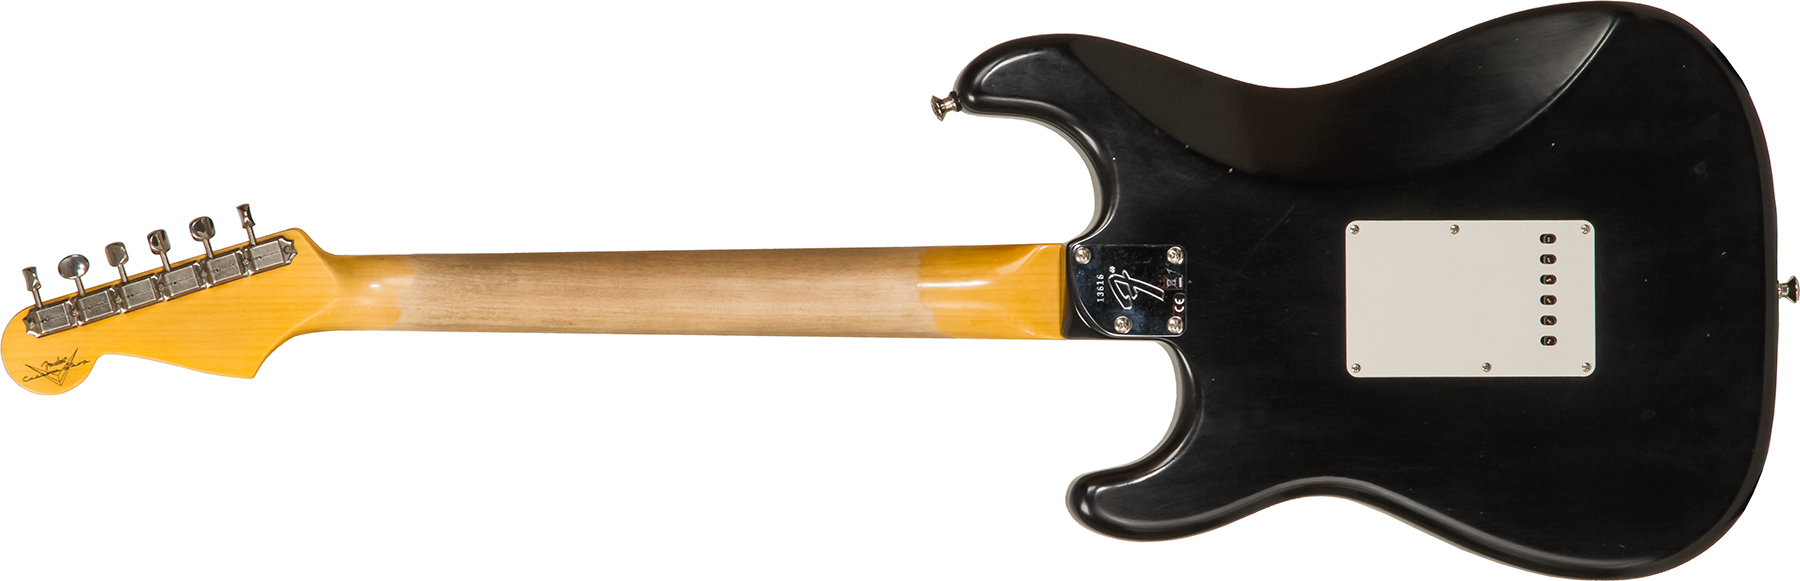 Fender Custom Shop Strat Postmodern 3s Trem Rw #xn13616 - Journeyman Relic Aged Black - Str shape electric guitar - Variation 1